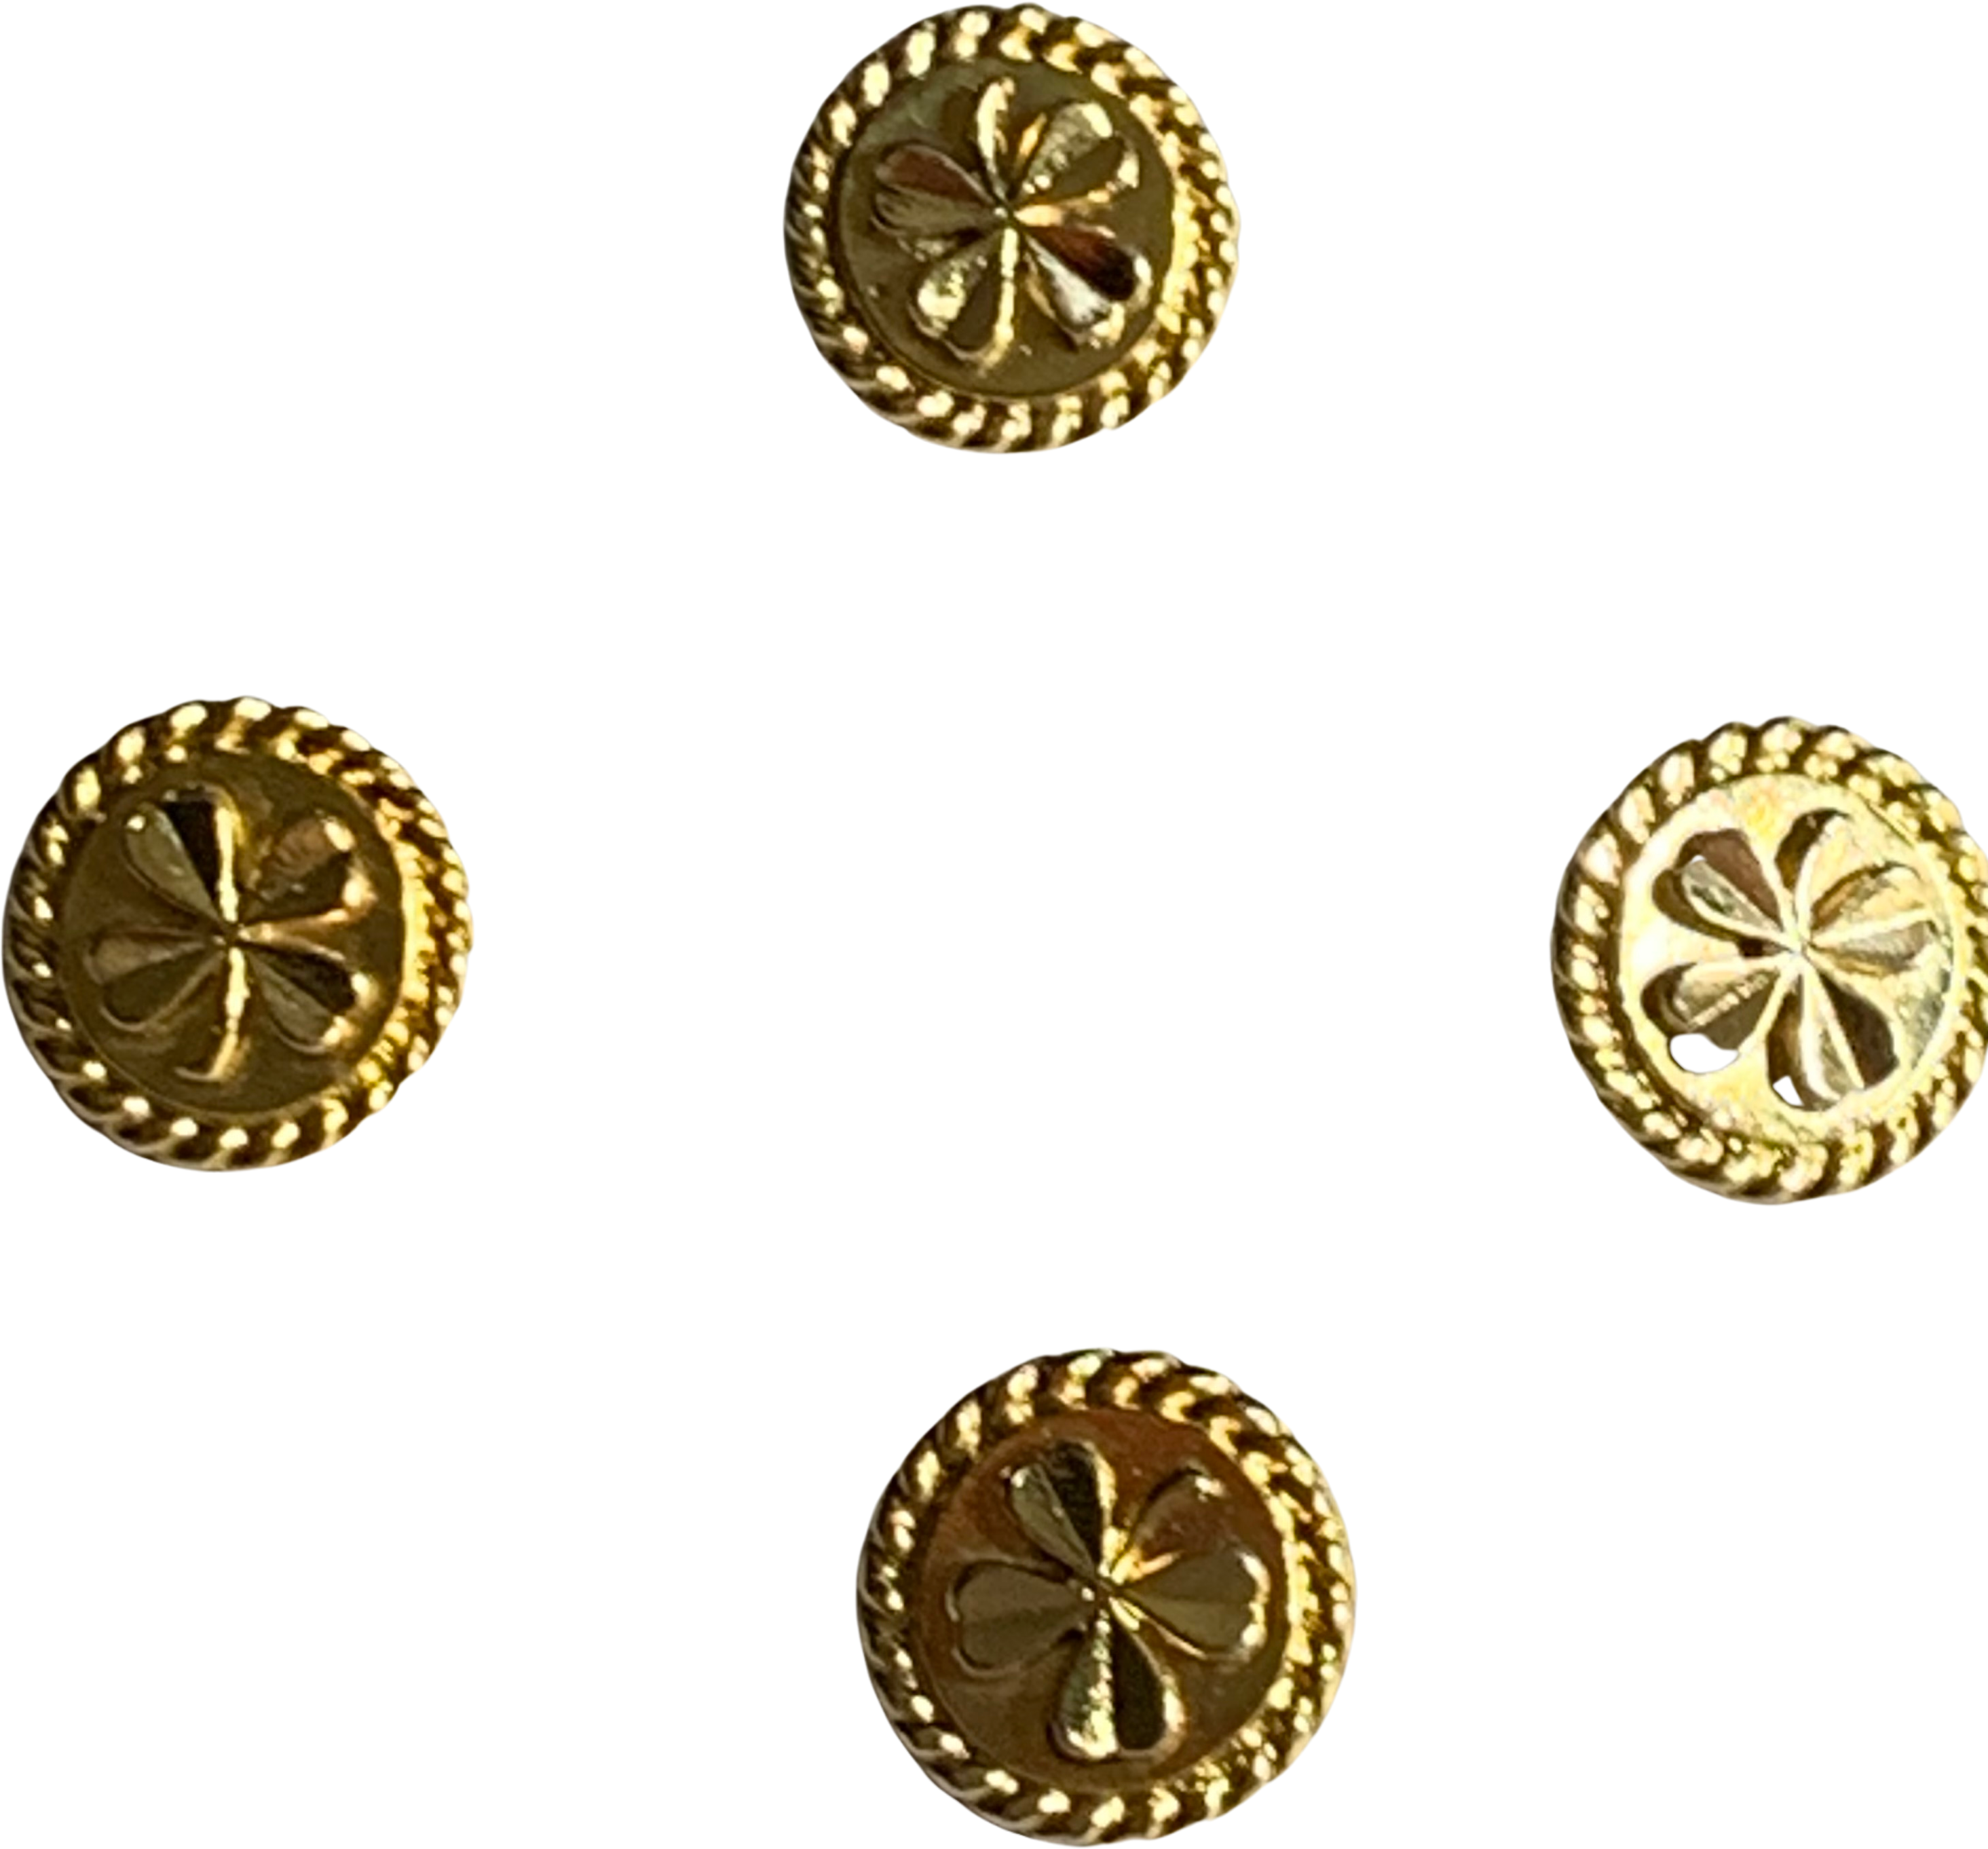 CHANEL Vintage Clover Button Cardigan Ivory Gold Cotton Button Pocket –  Luxury Fashion Spark